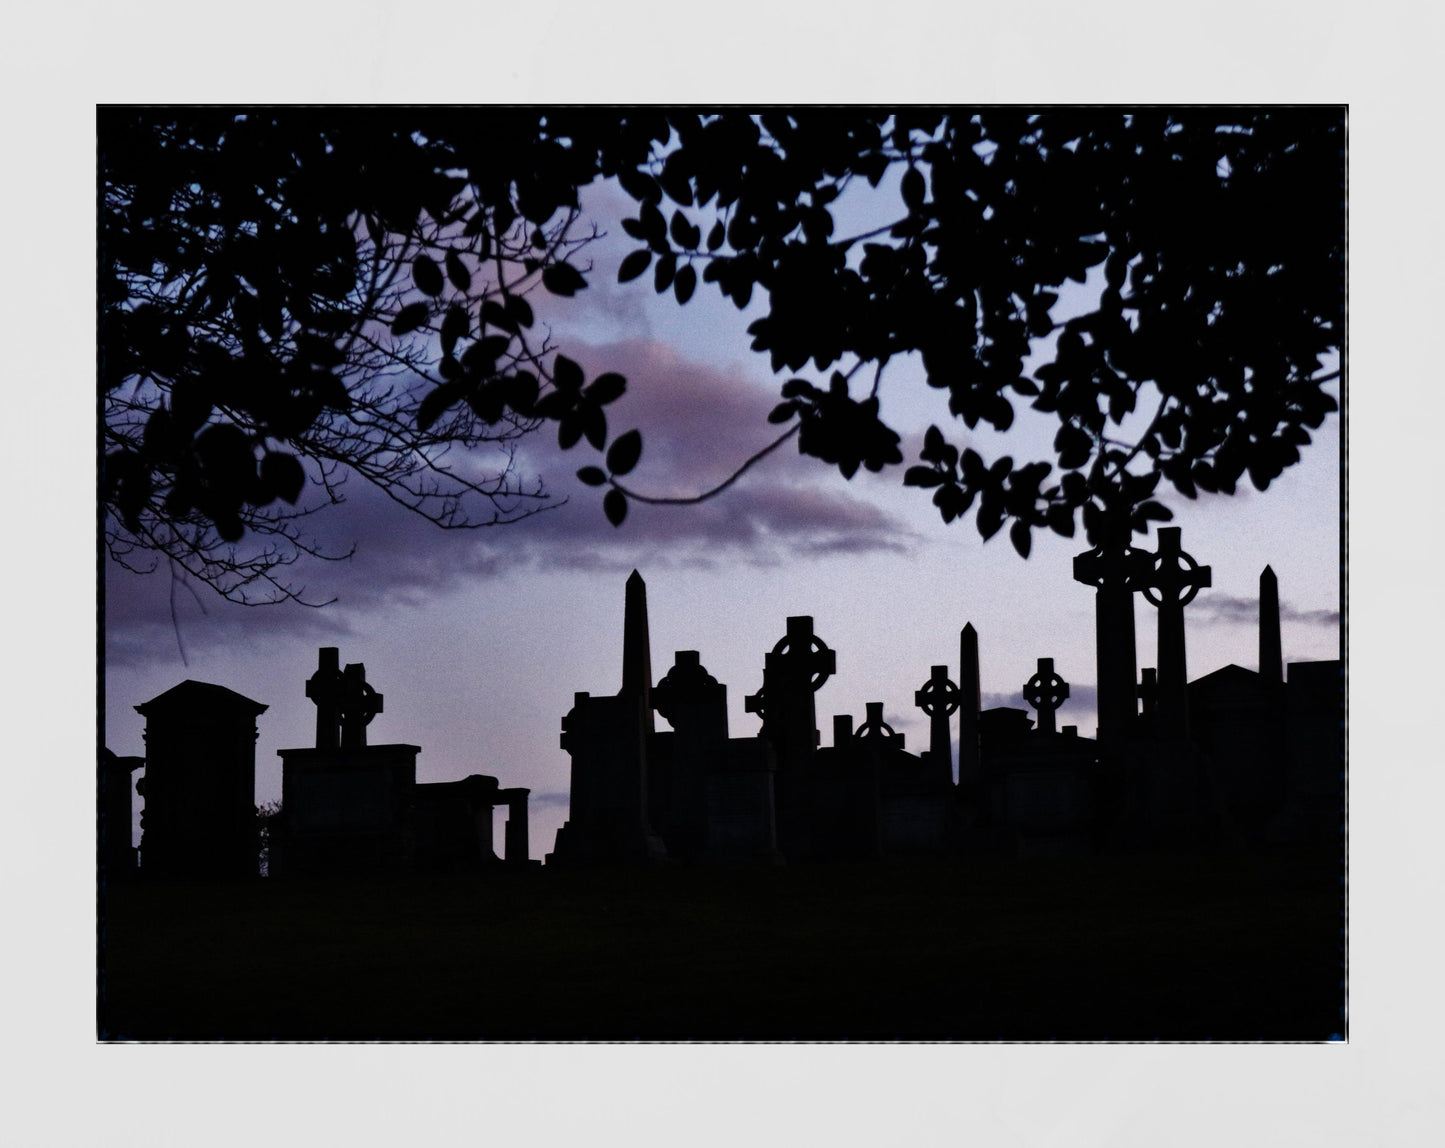 Glasgow Necropolis Graveyard Photography Poster